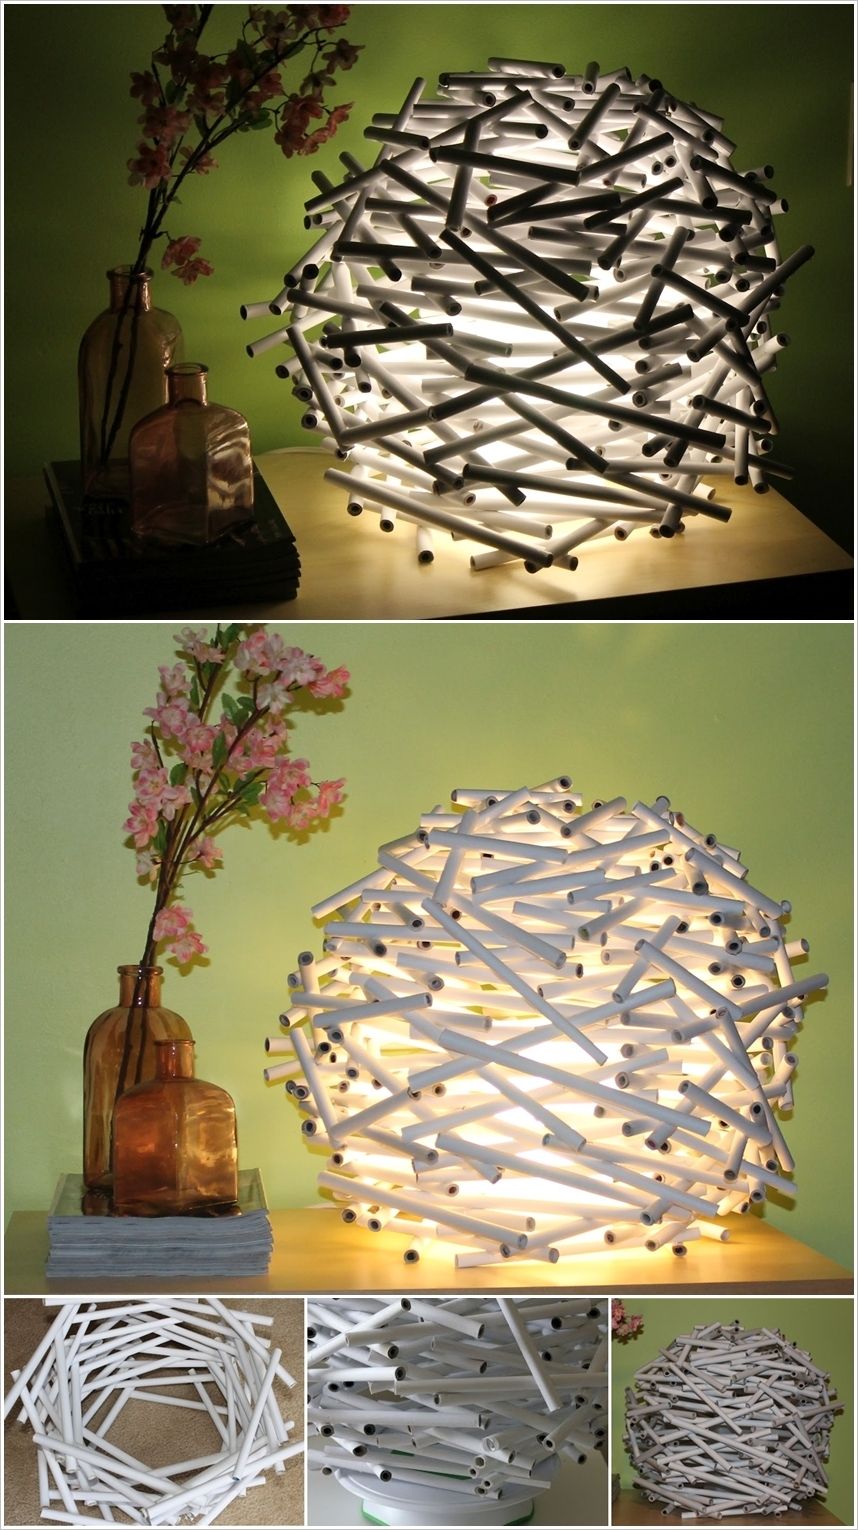 Tissue flowers and paper lanterns design ideas